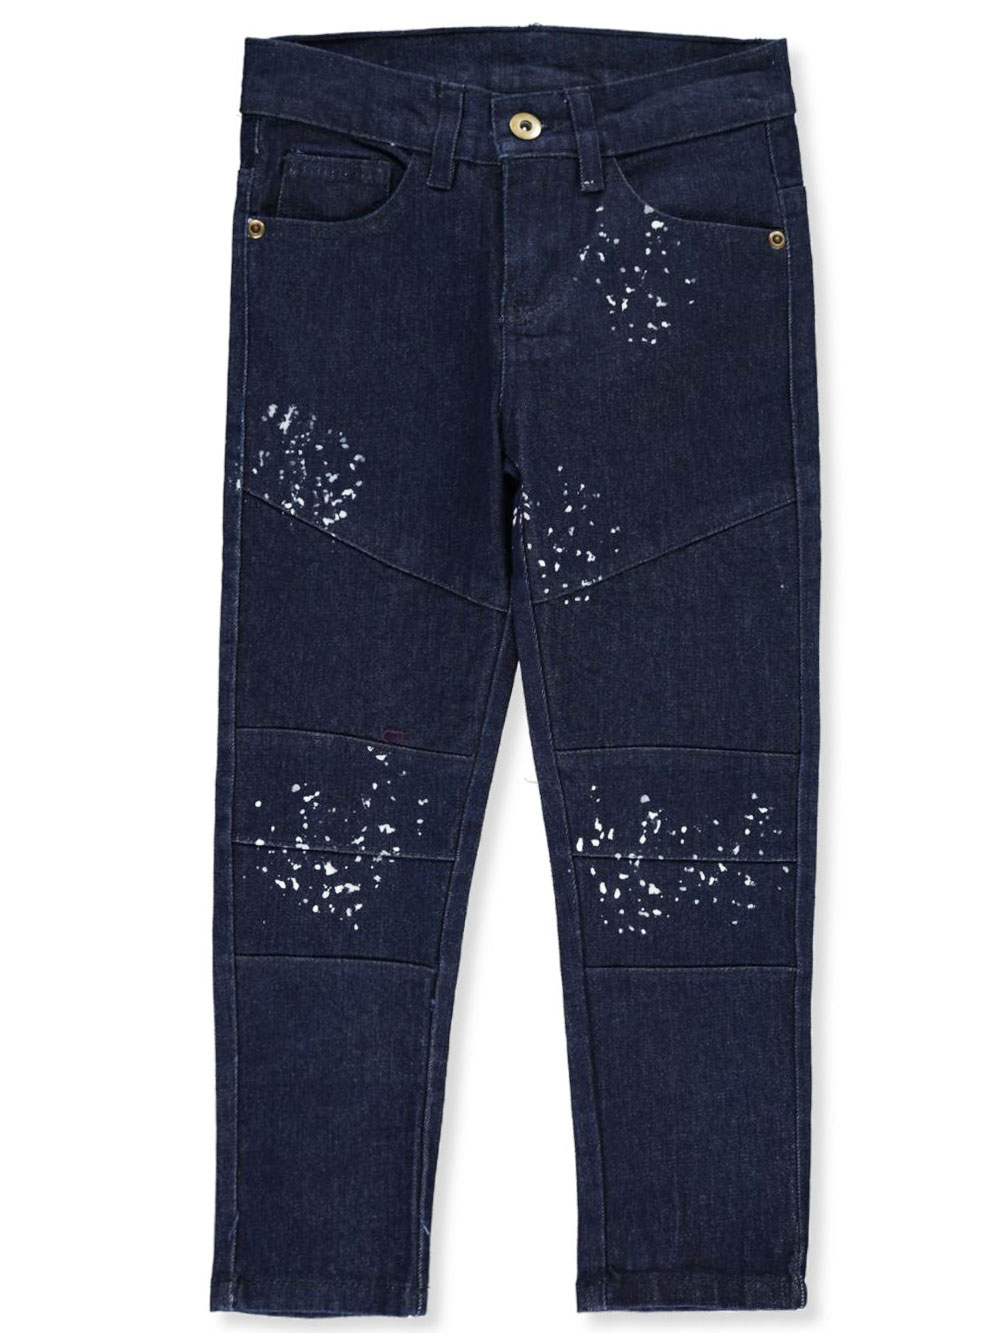 Quad Seven Boys' Splatter Reinforced Skinny Jeans (Little Boys) - image 1 of 2